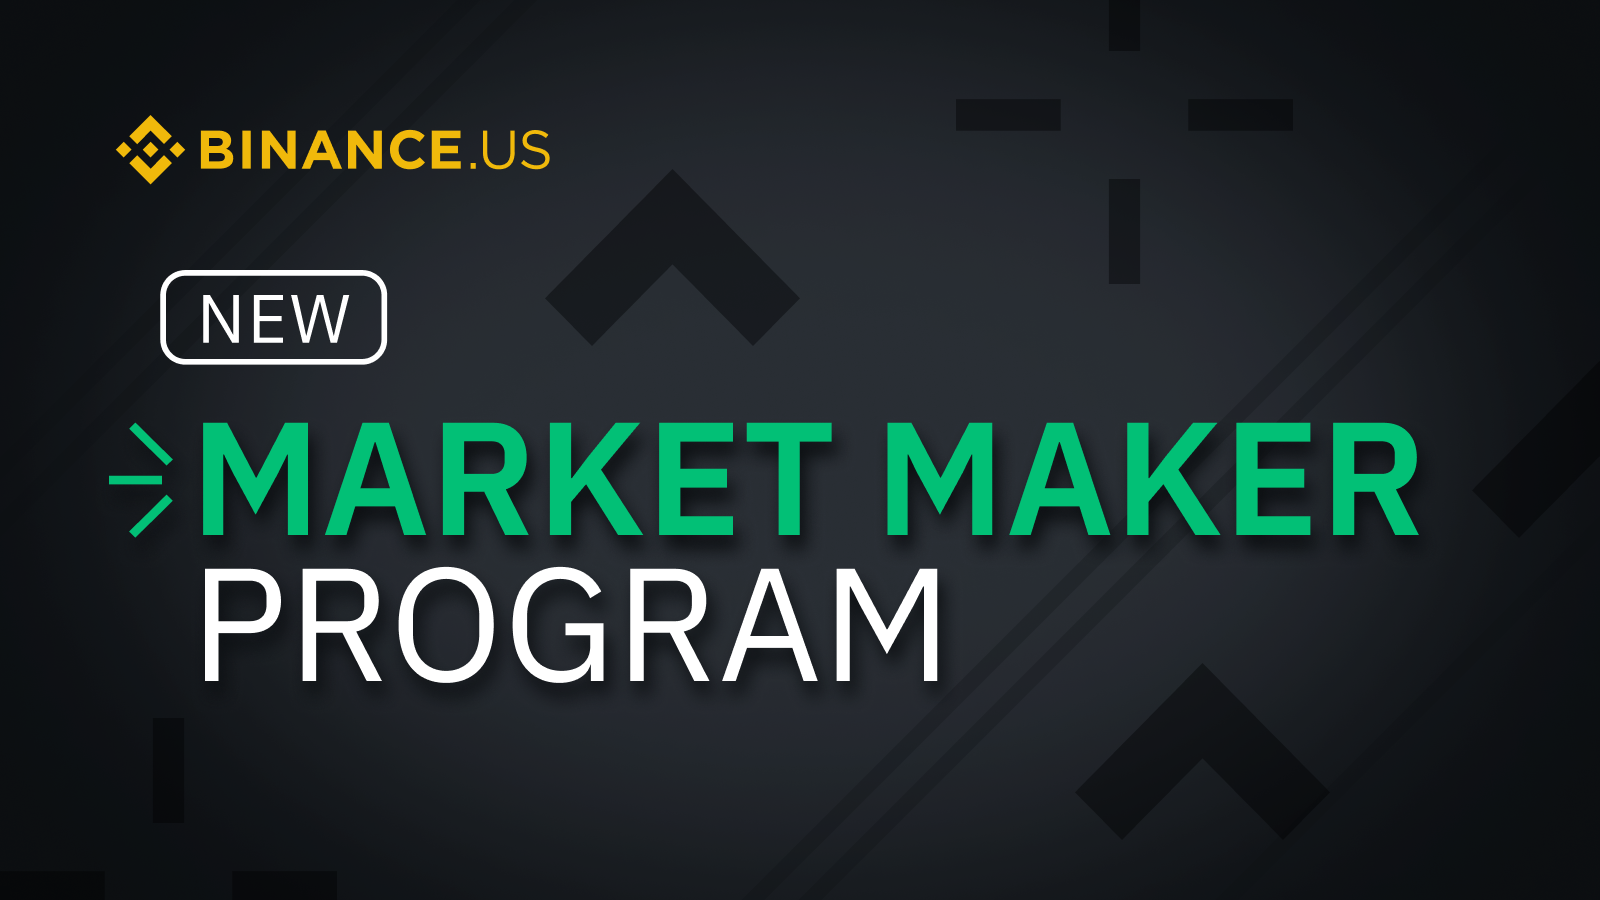 Binance.US Launches Market Maker Program with Rebates